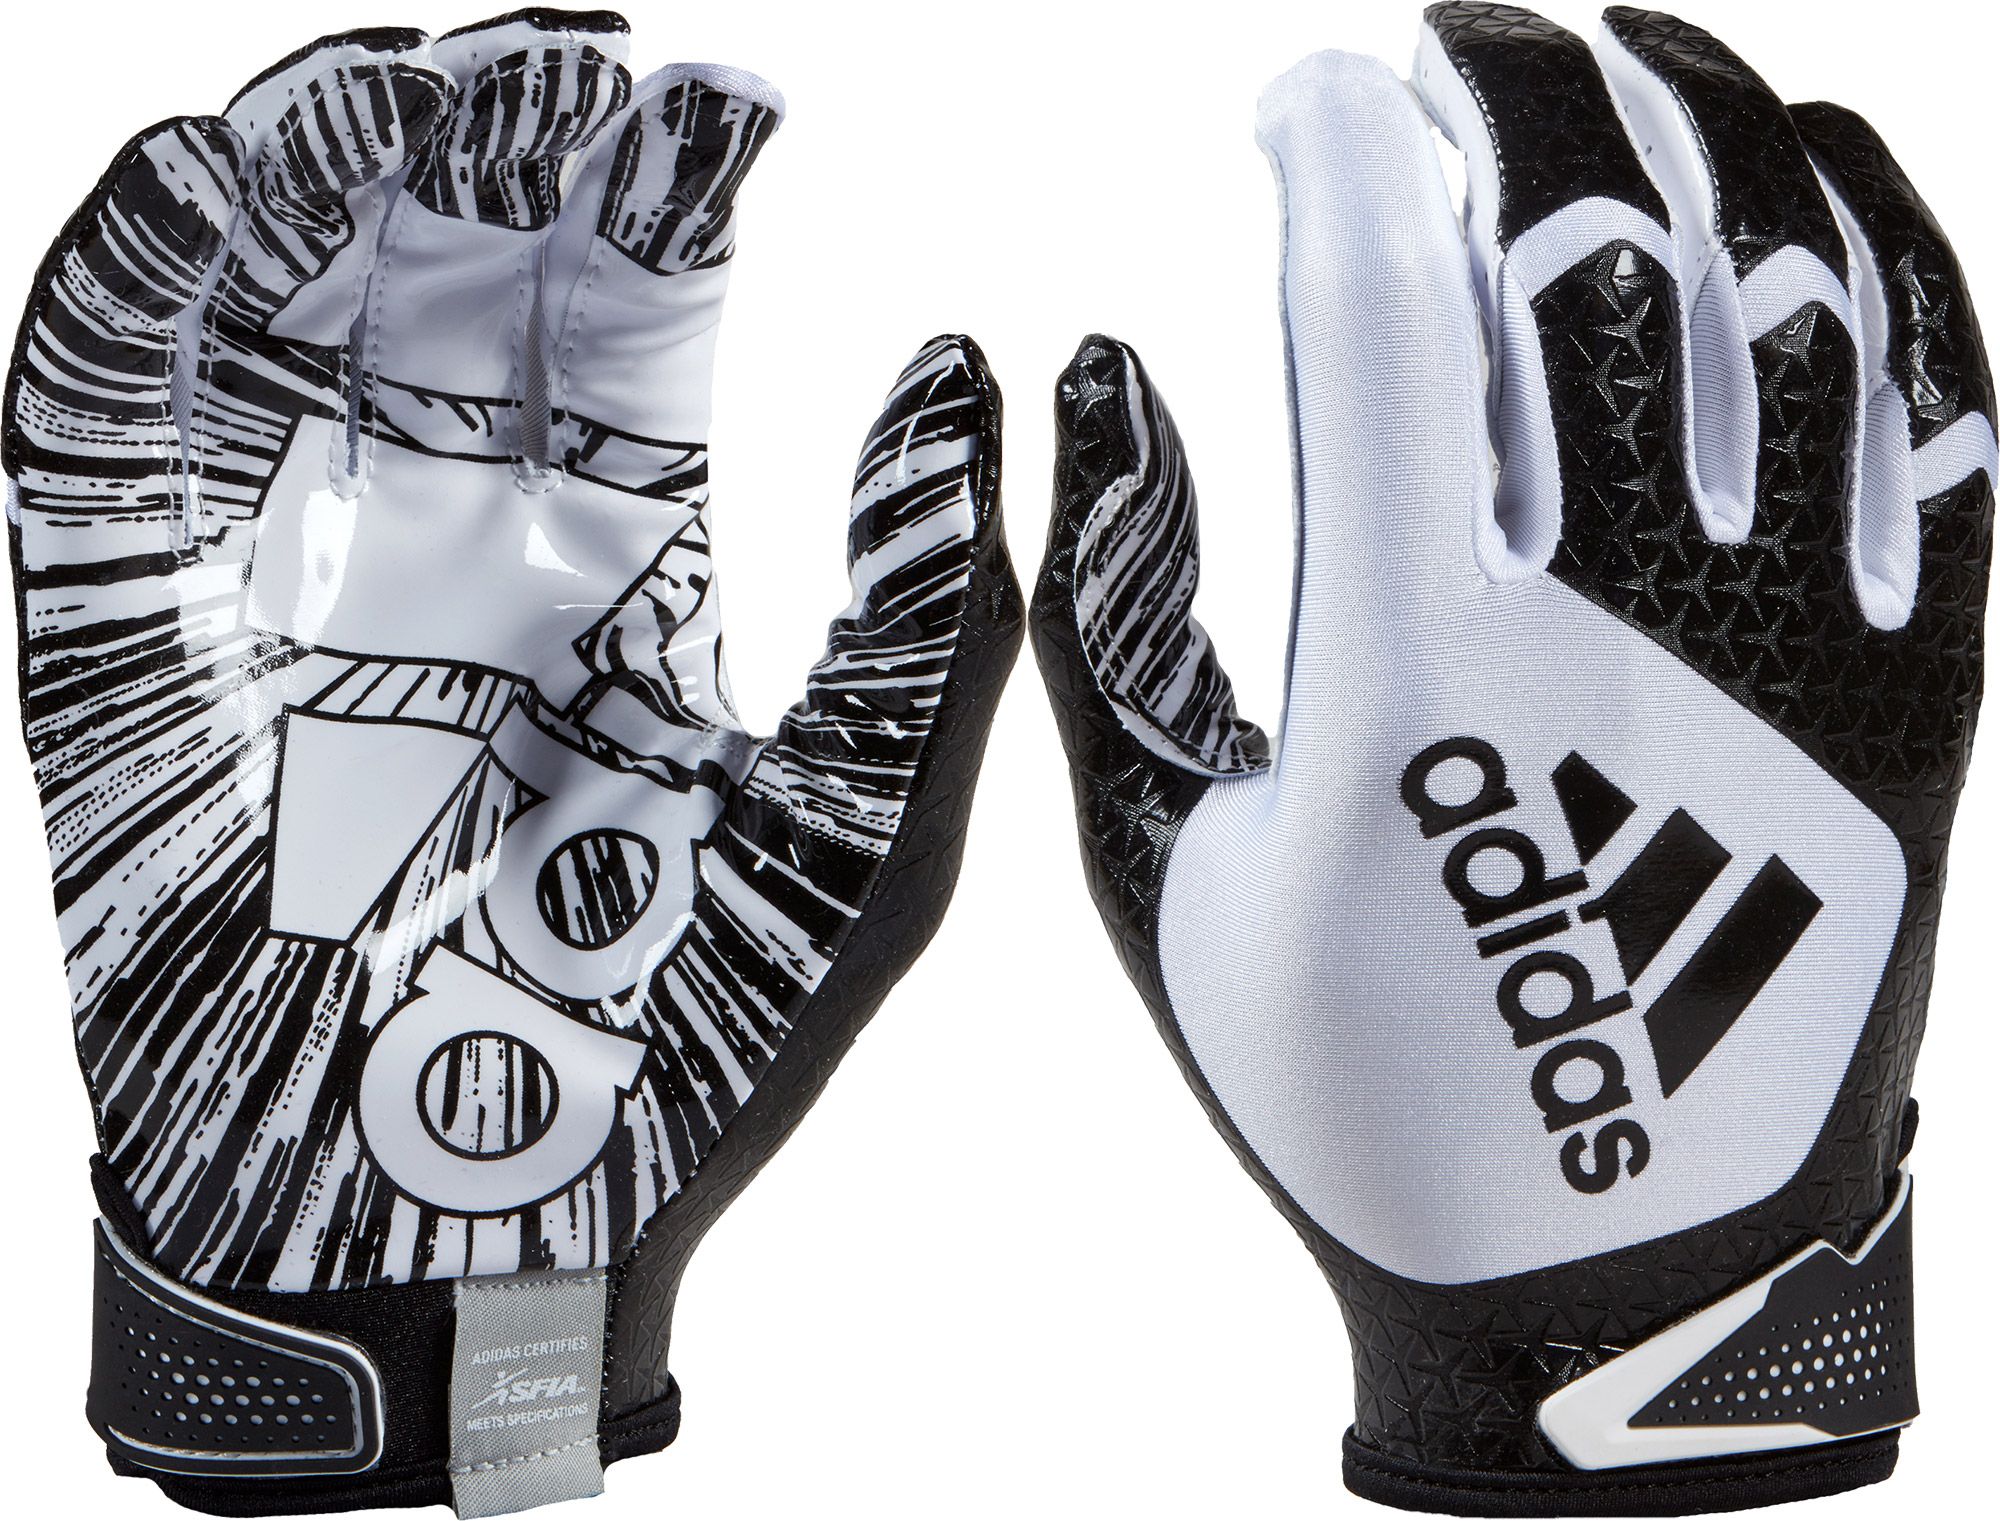 adidas black football gloves